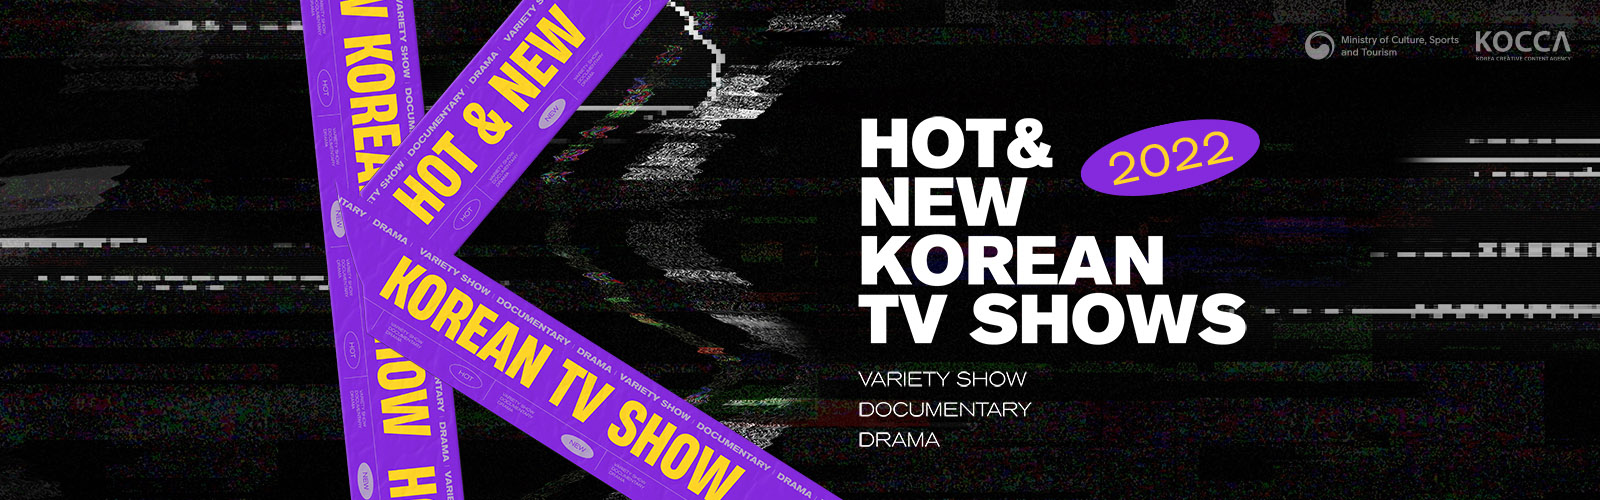 KOCCA: Korea Creative Content Agency - TV Shows